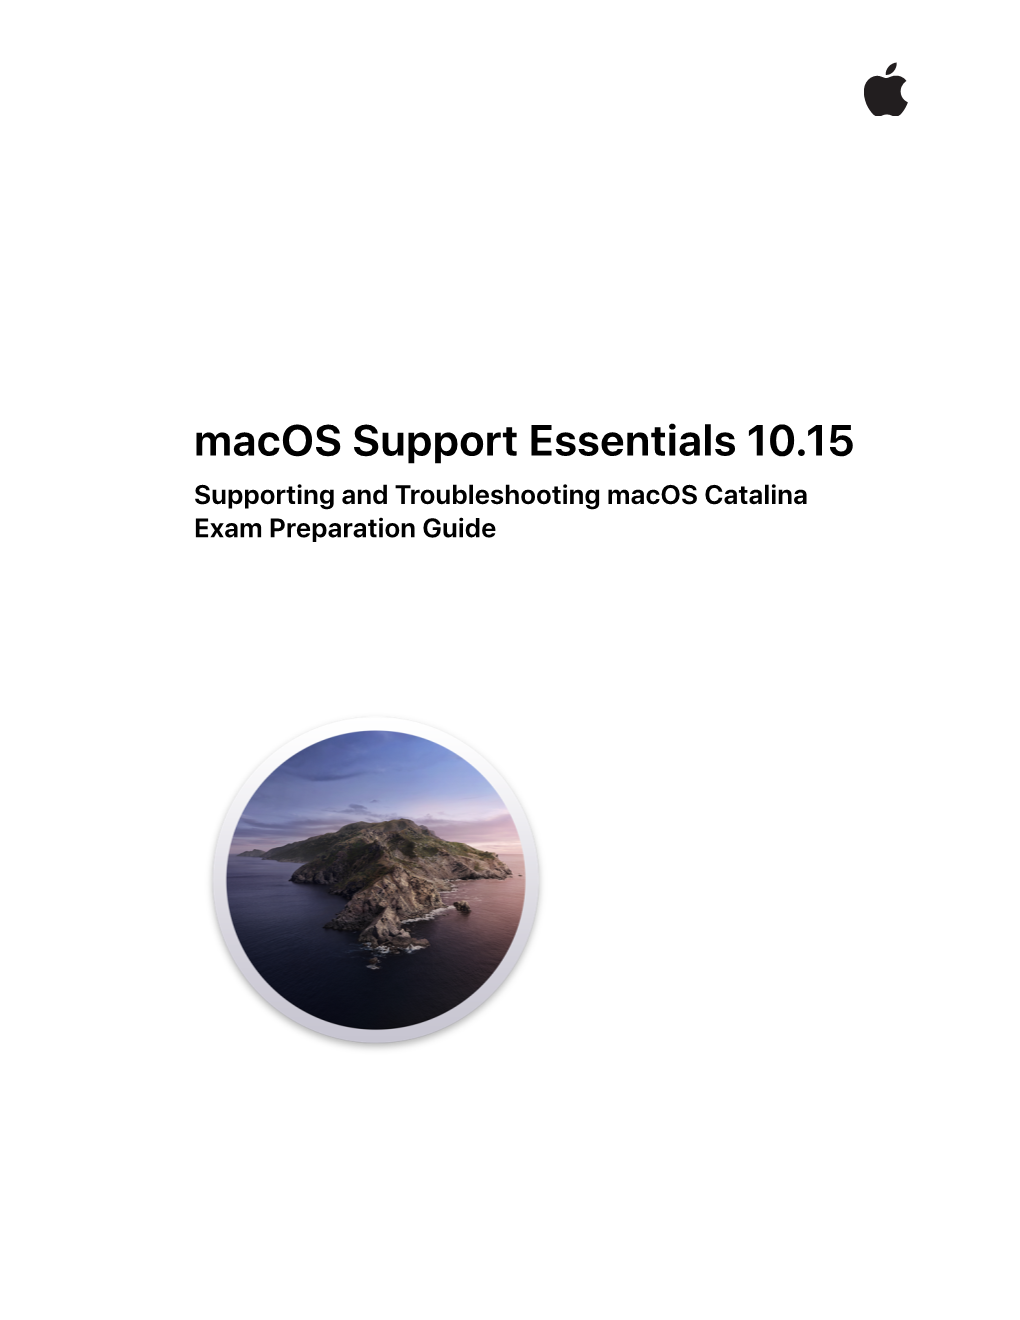 Macos Support Essentials 10.15 Exam Preparation Guide